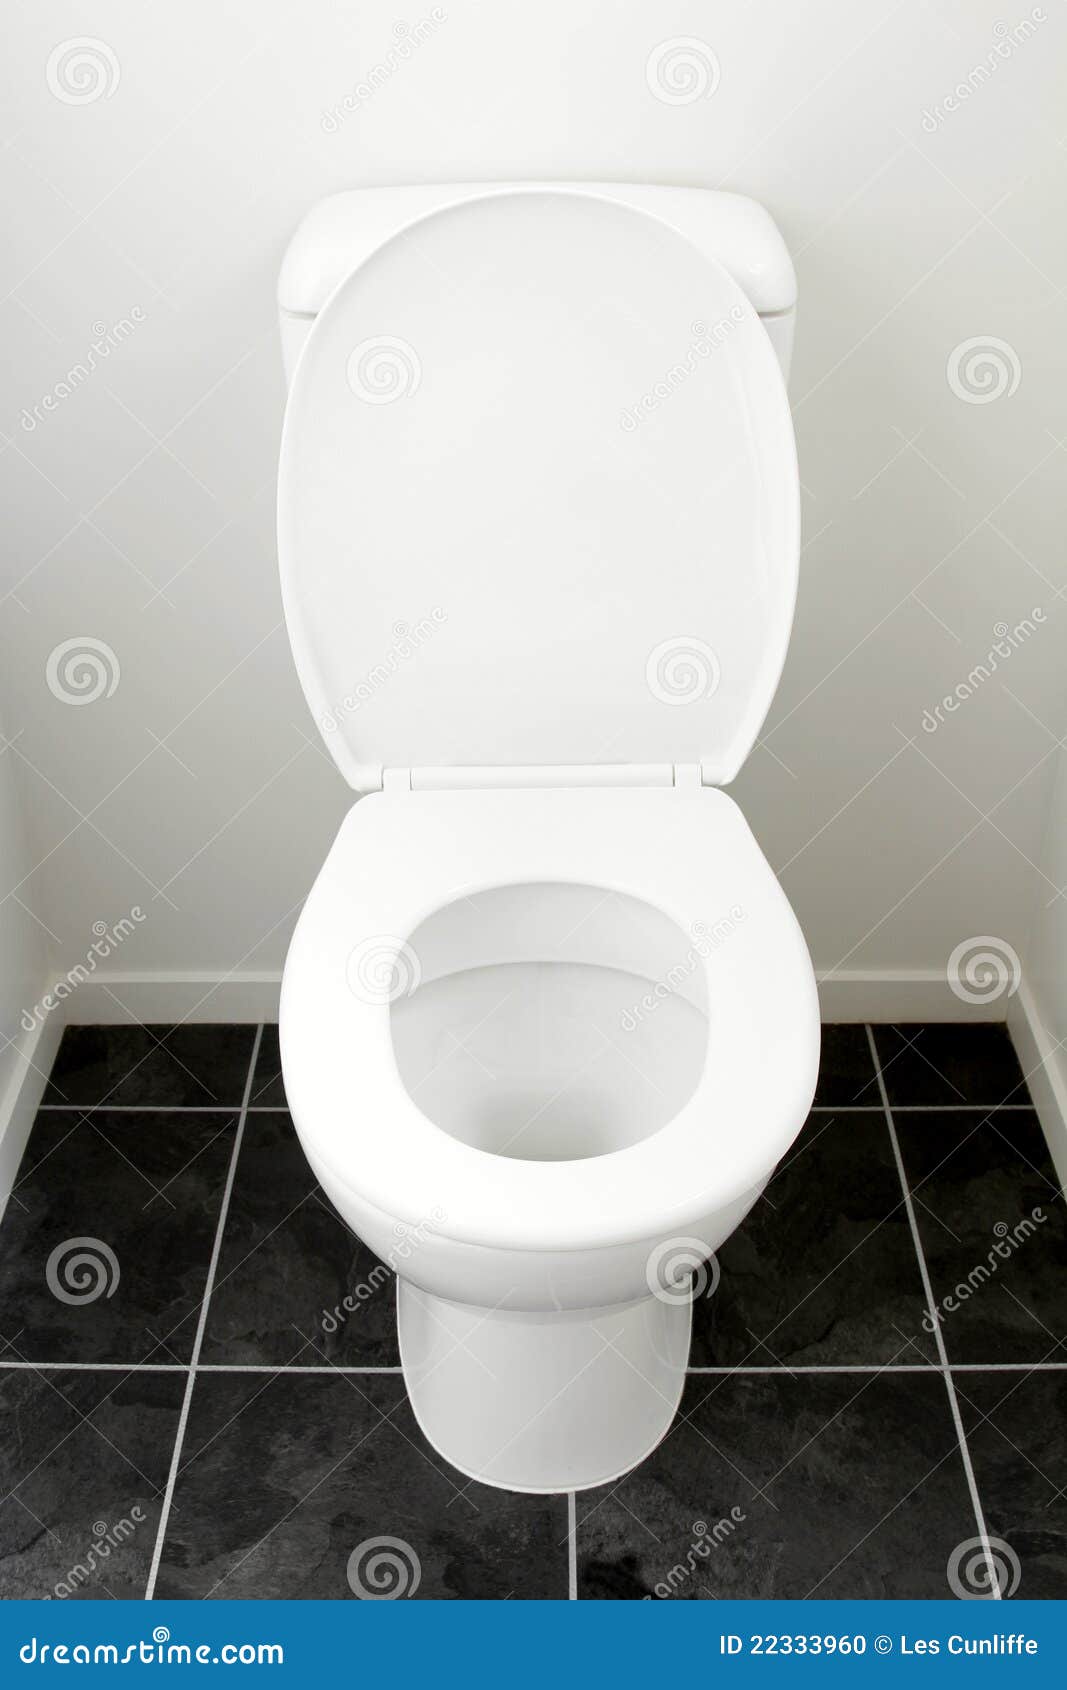 Toilet Stock Photo - Image: 22333960